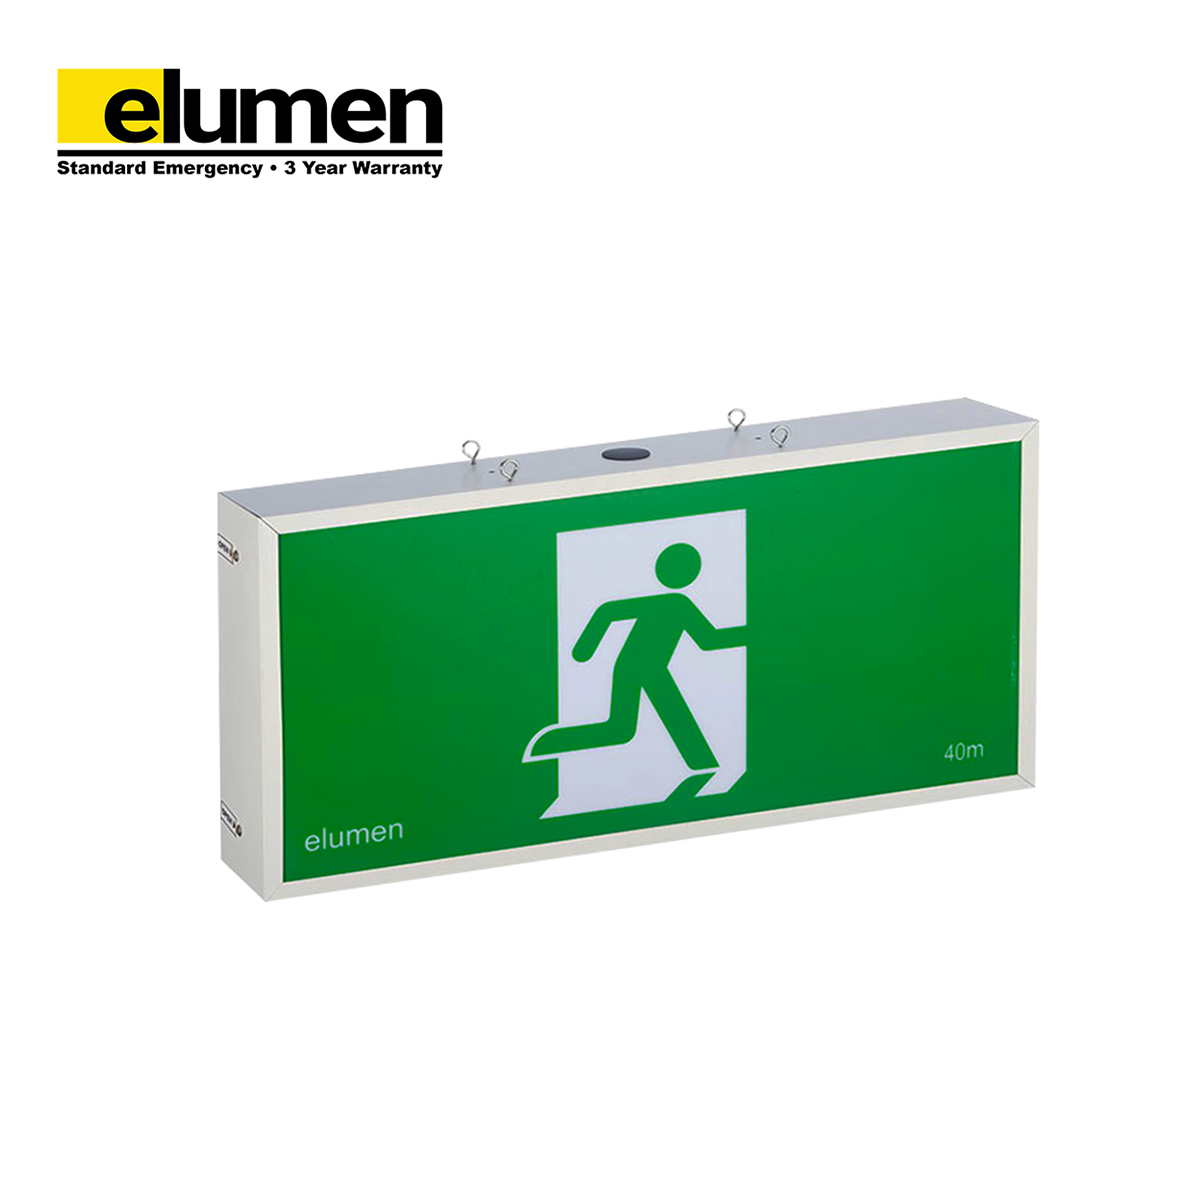 LED Jumbo Exit Light - Emergency - Premium Exit & Emergency Lighting from elumen - Shop now at Firebox Australia